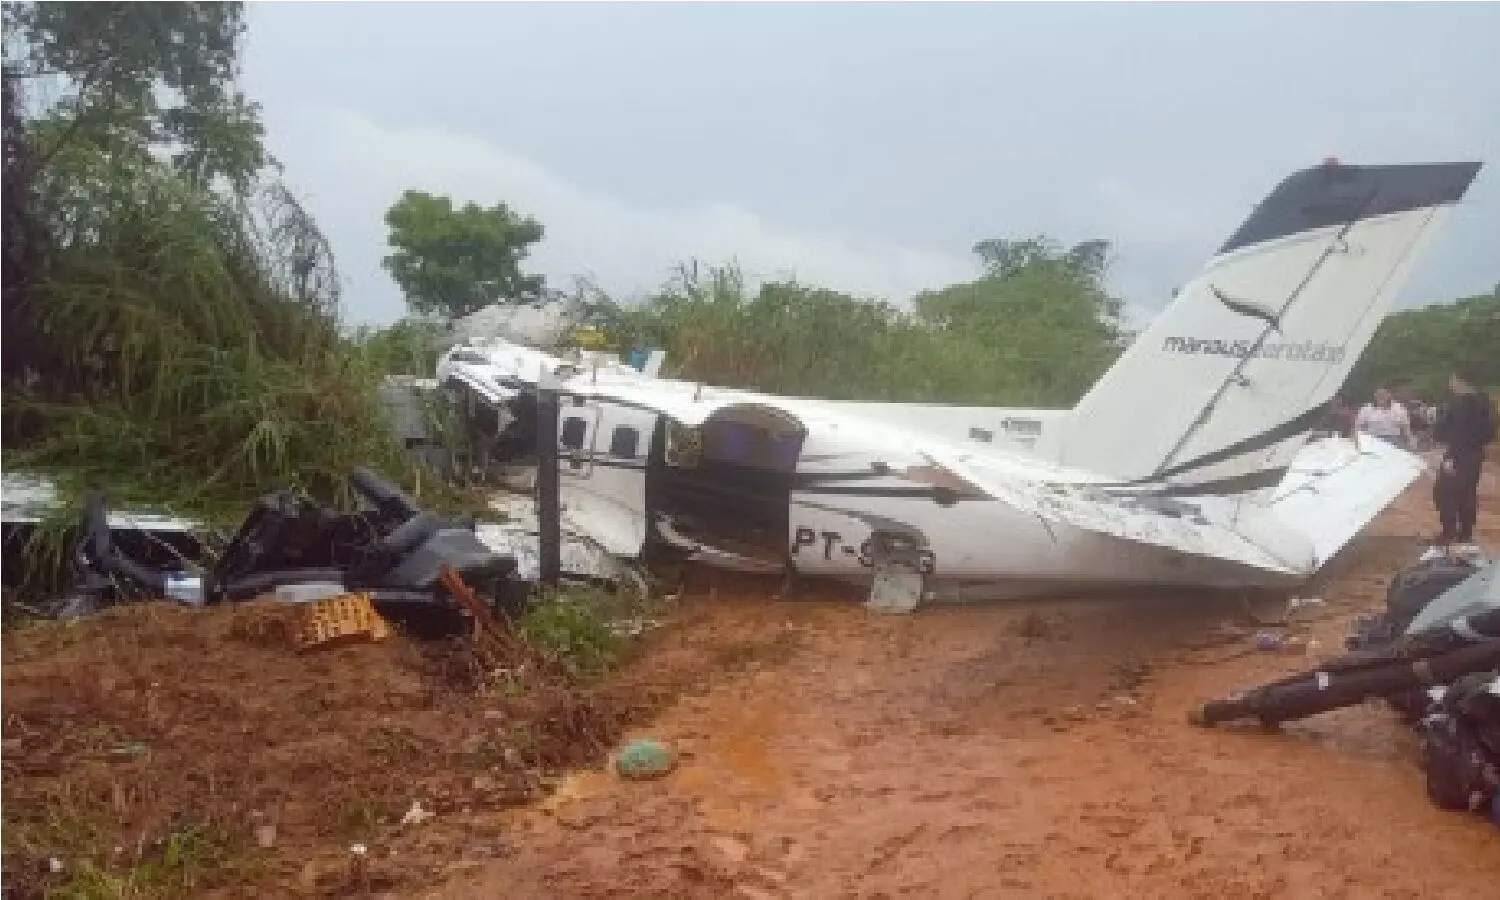 Brazil Plane Crash